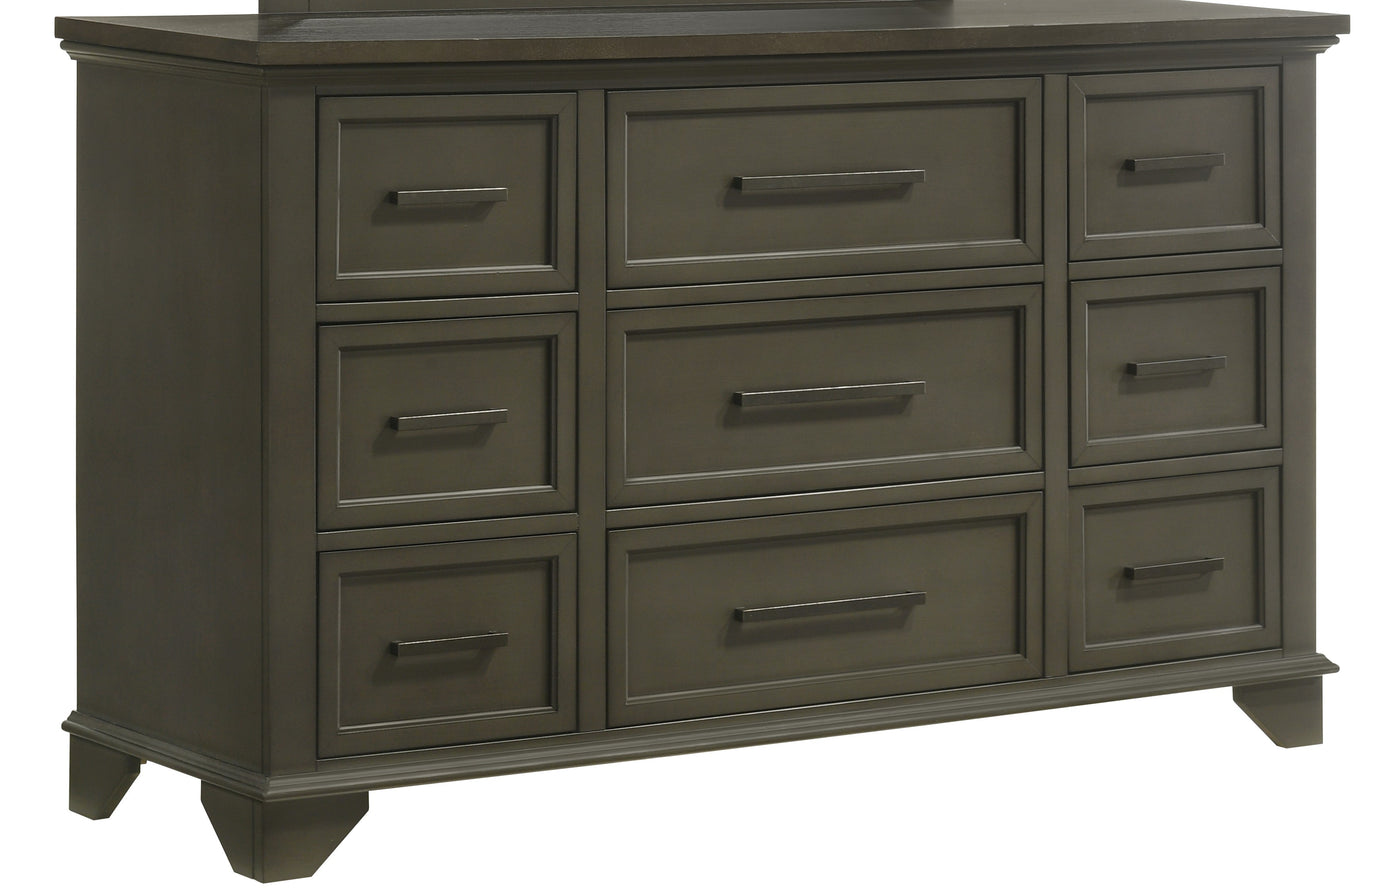 Abigail 9 Drawer Dresser - Grey